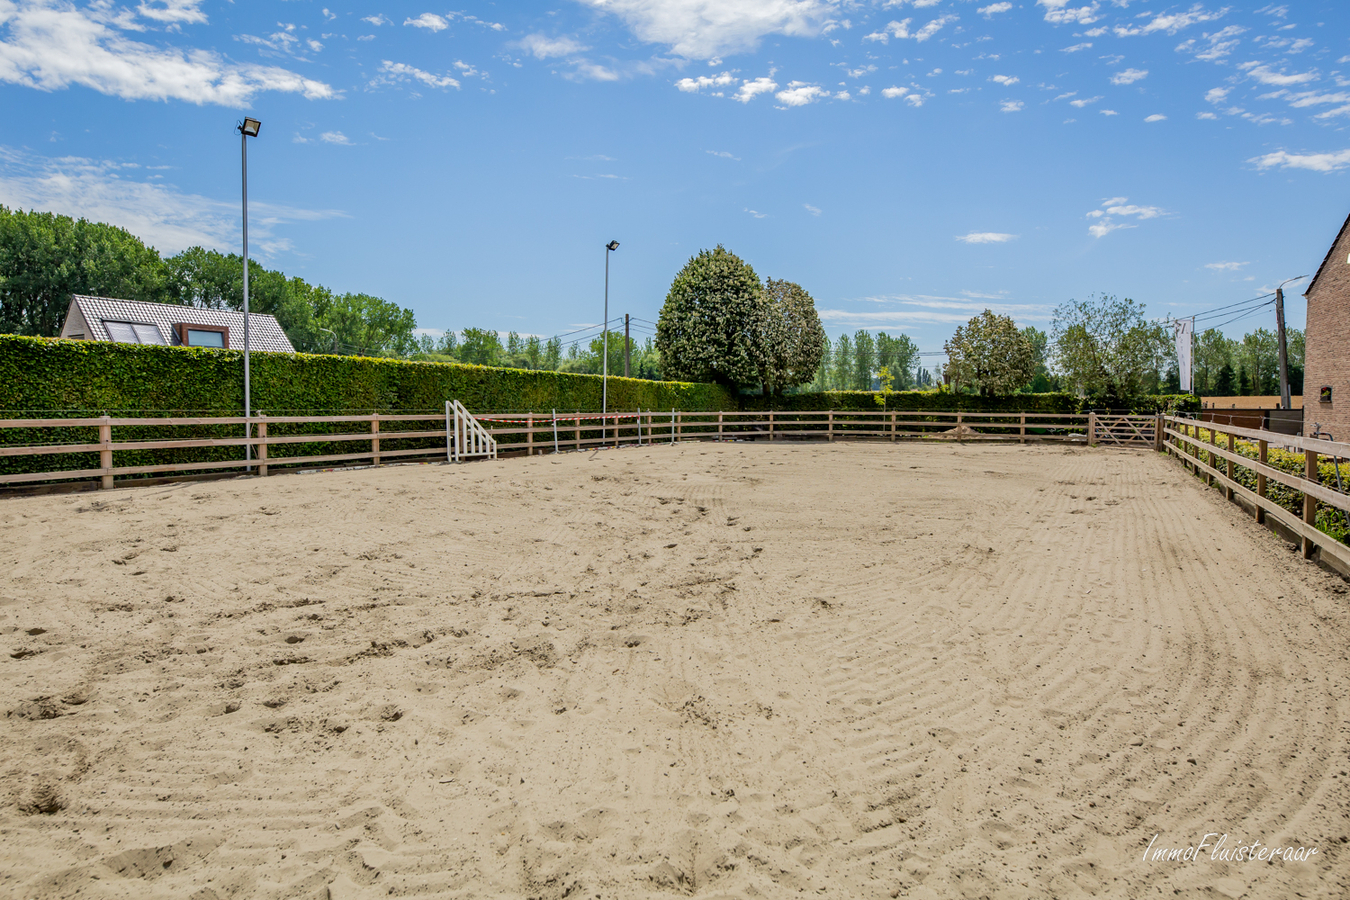 Professional equestrian property on approximately 4ha/9ac at Lennik (Flemisch Brabant) 